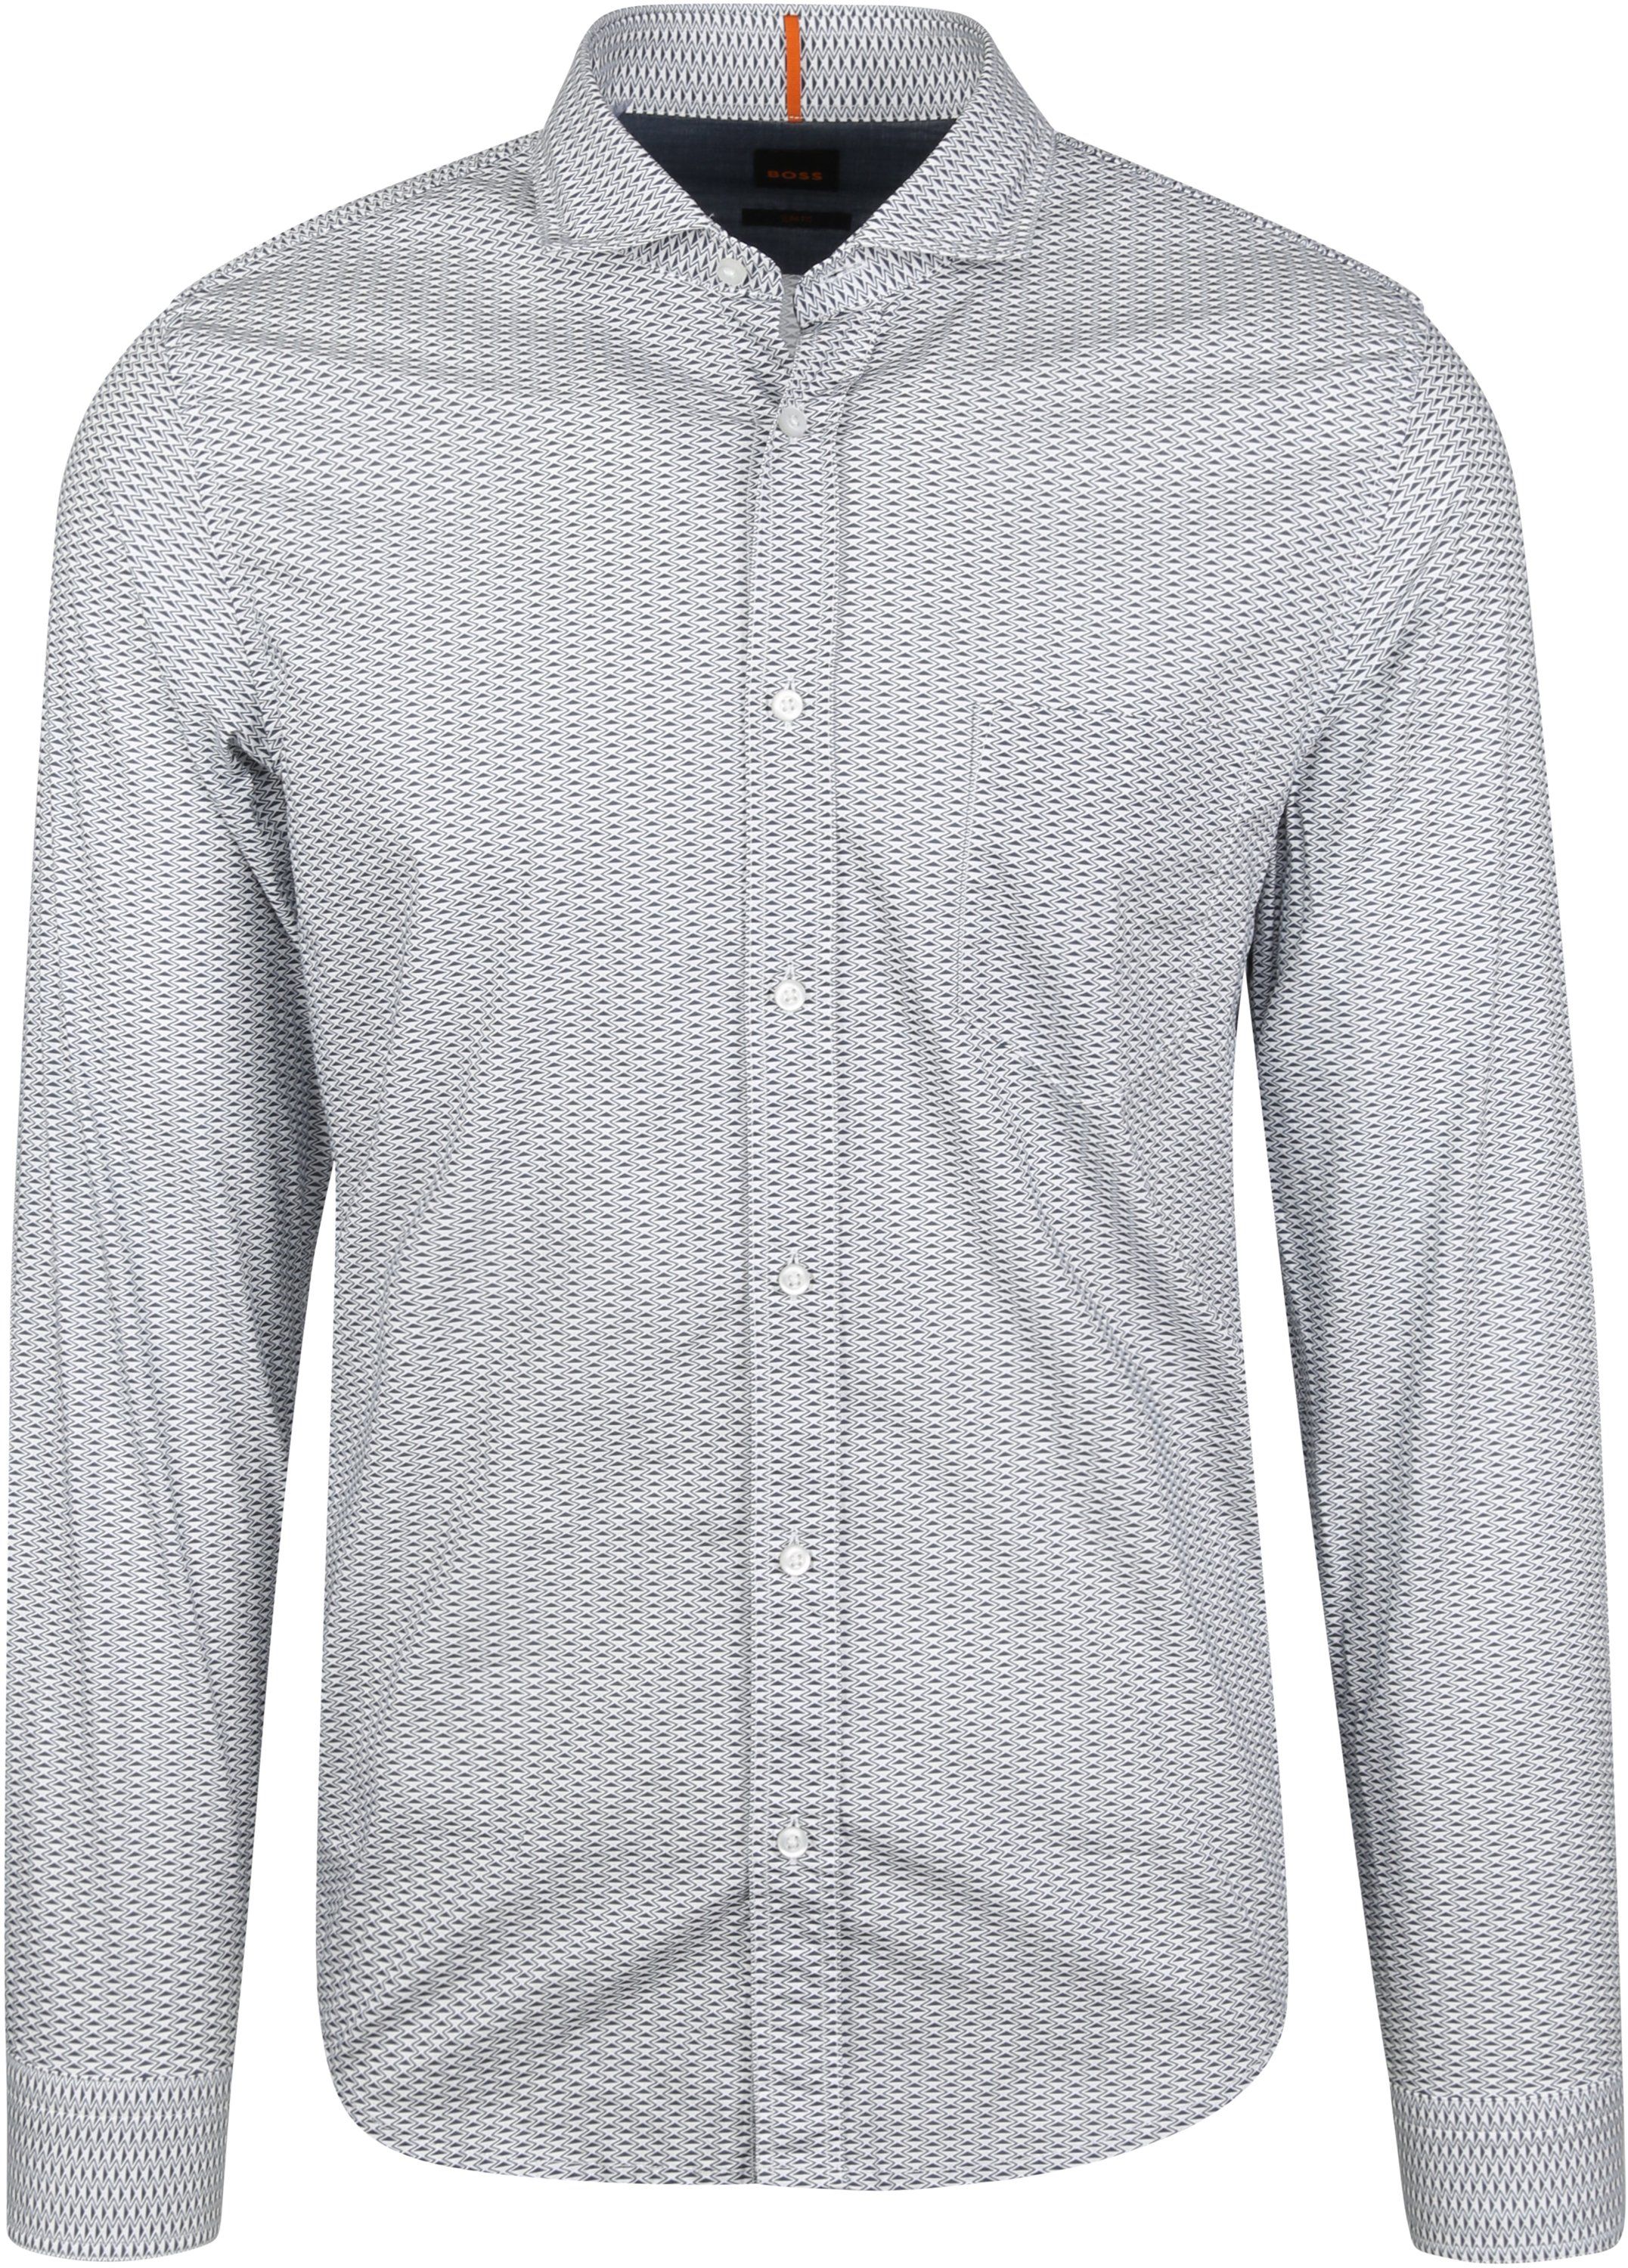 Hugo Boss Shirt Printed Gray Grey size L